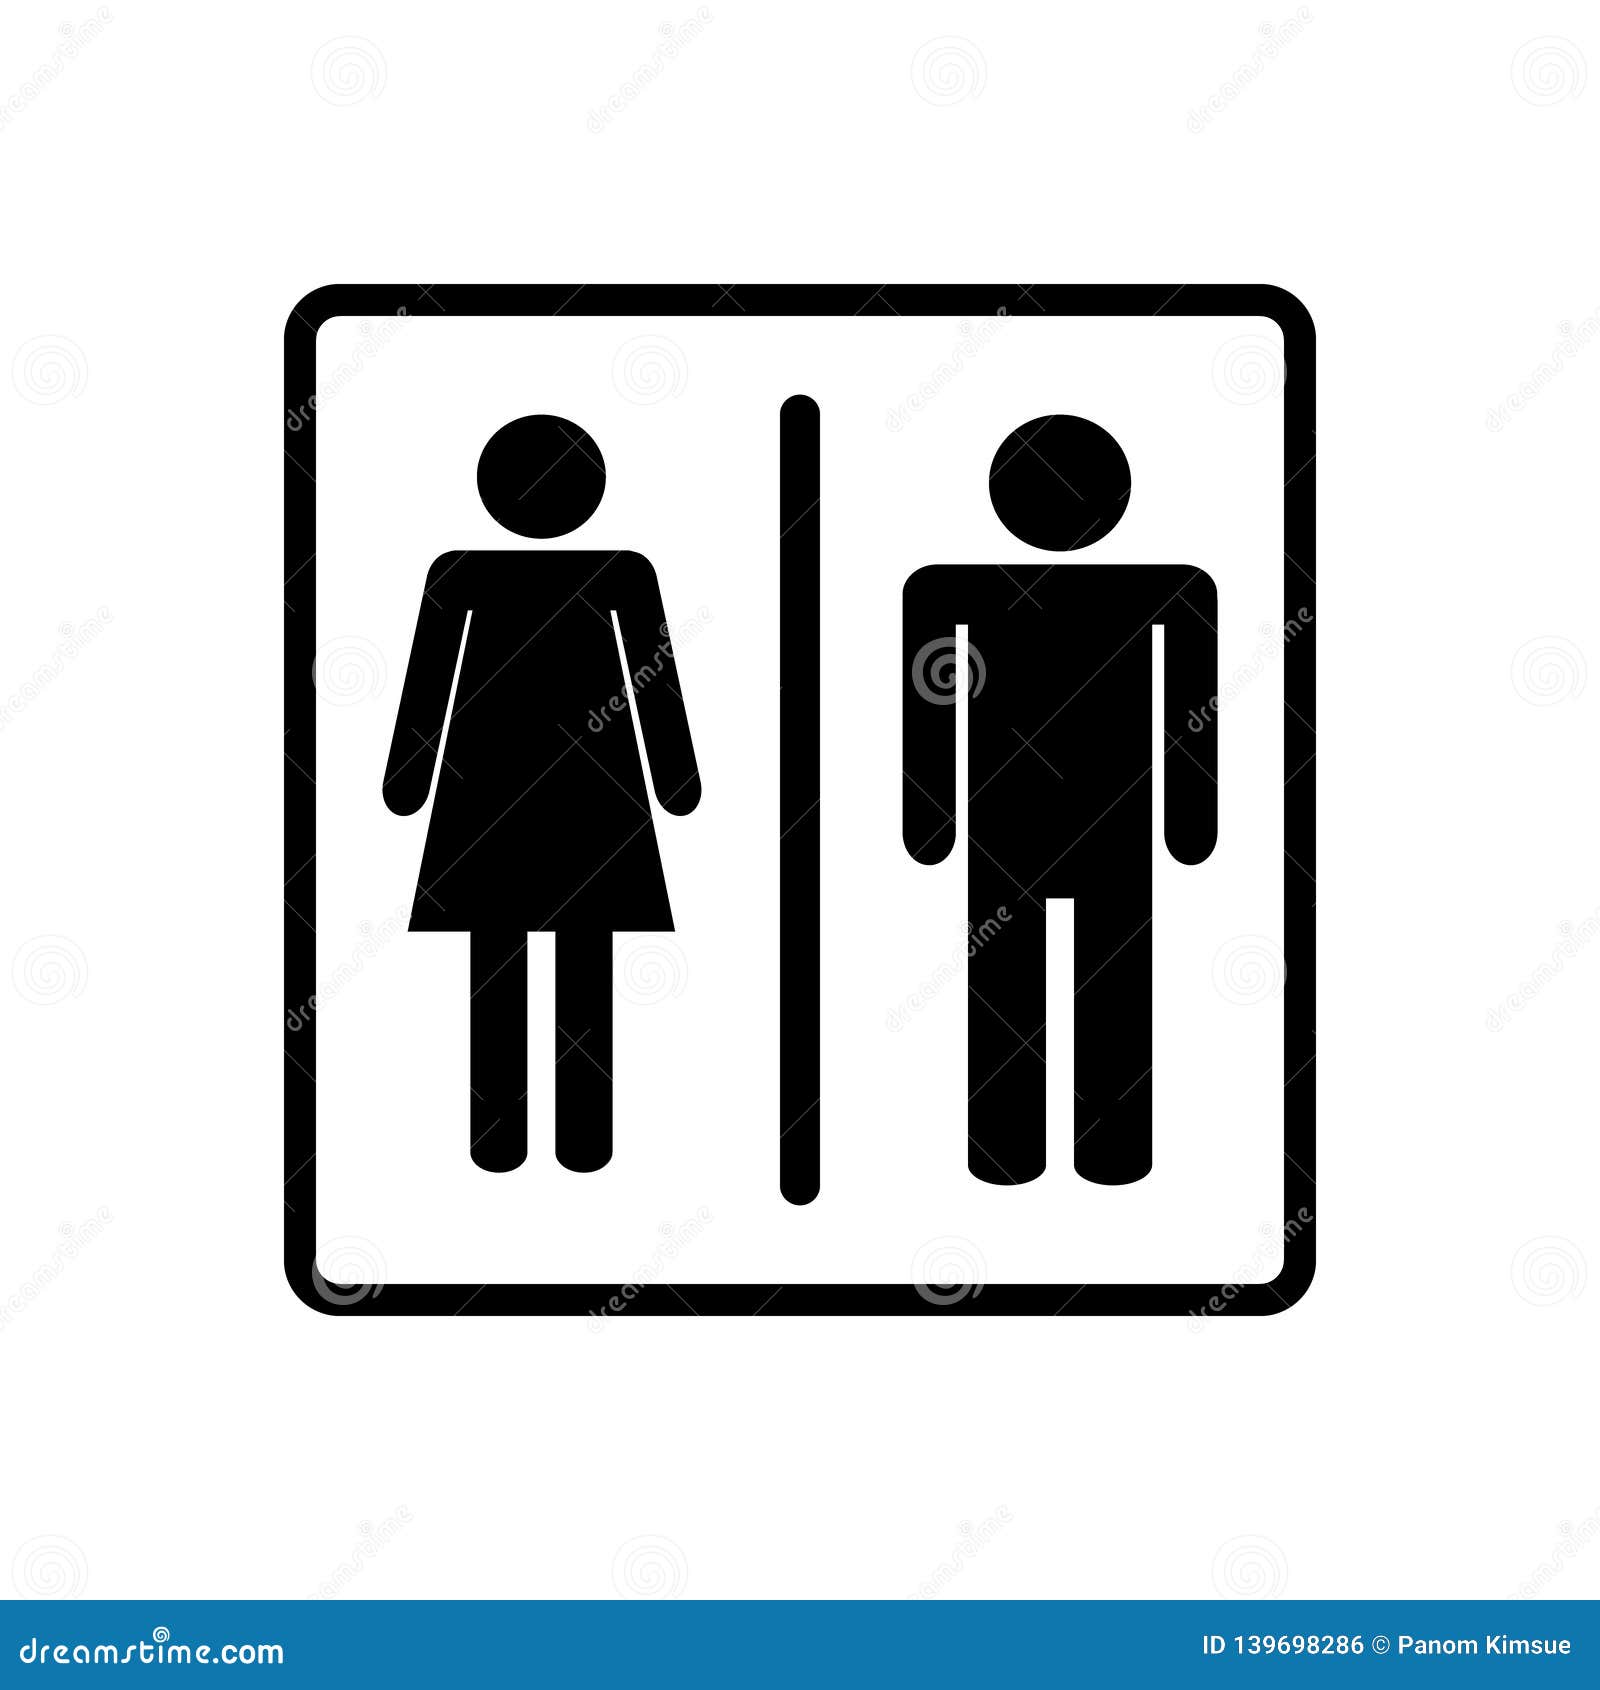 toilet icon  rest room  for graphic , logo, web site, social media, mobile app, ui 